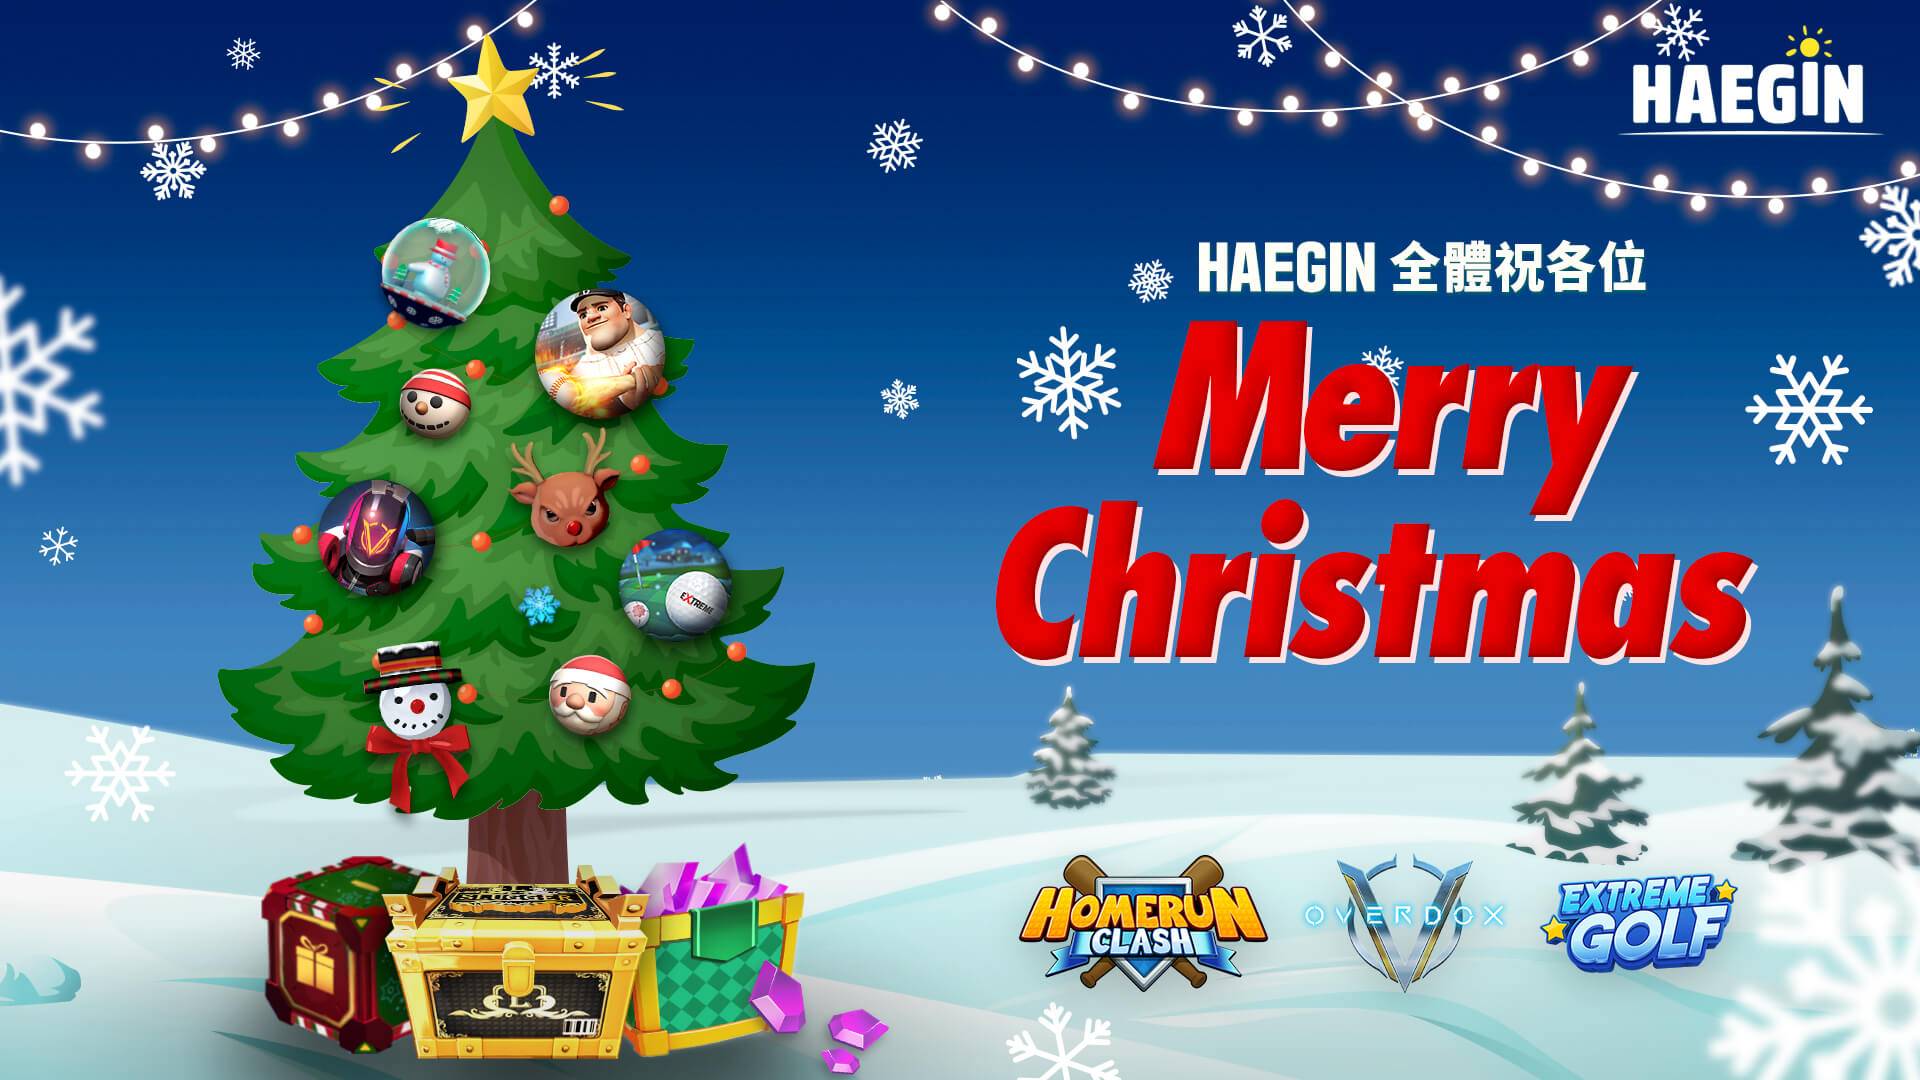 HAEGIN旗下3種手游進行改版同時進行聖誕節紀念活動